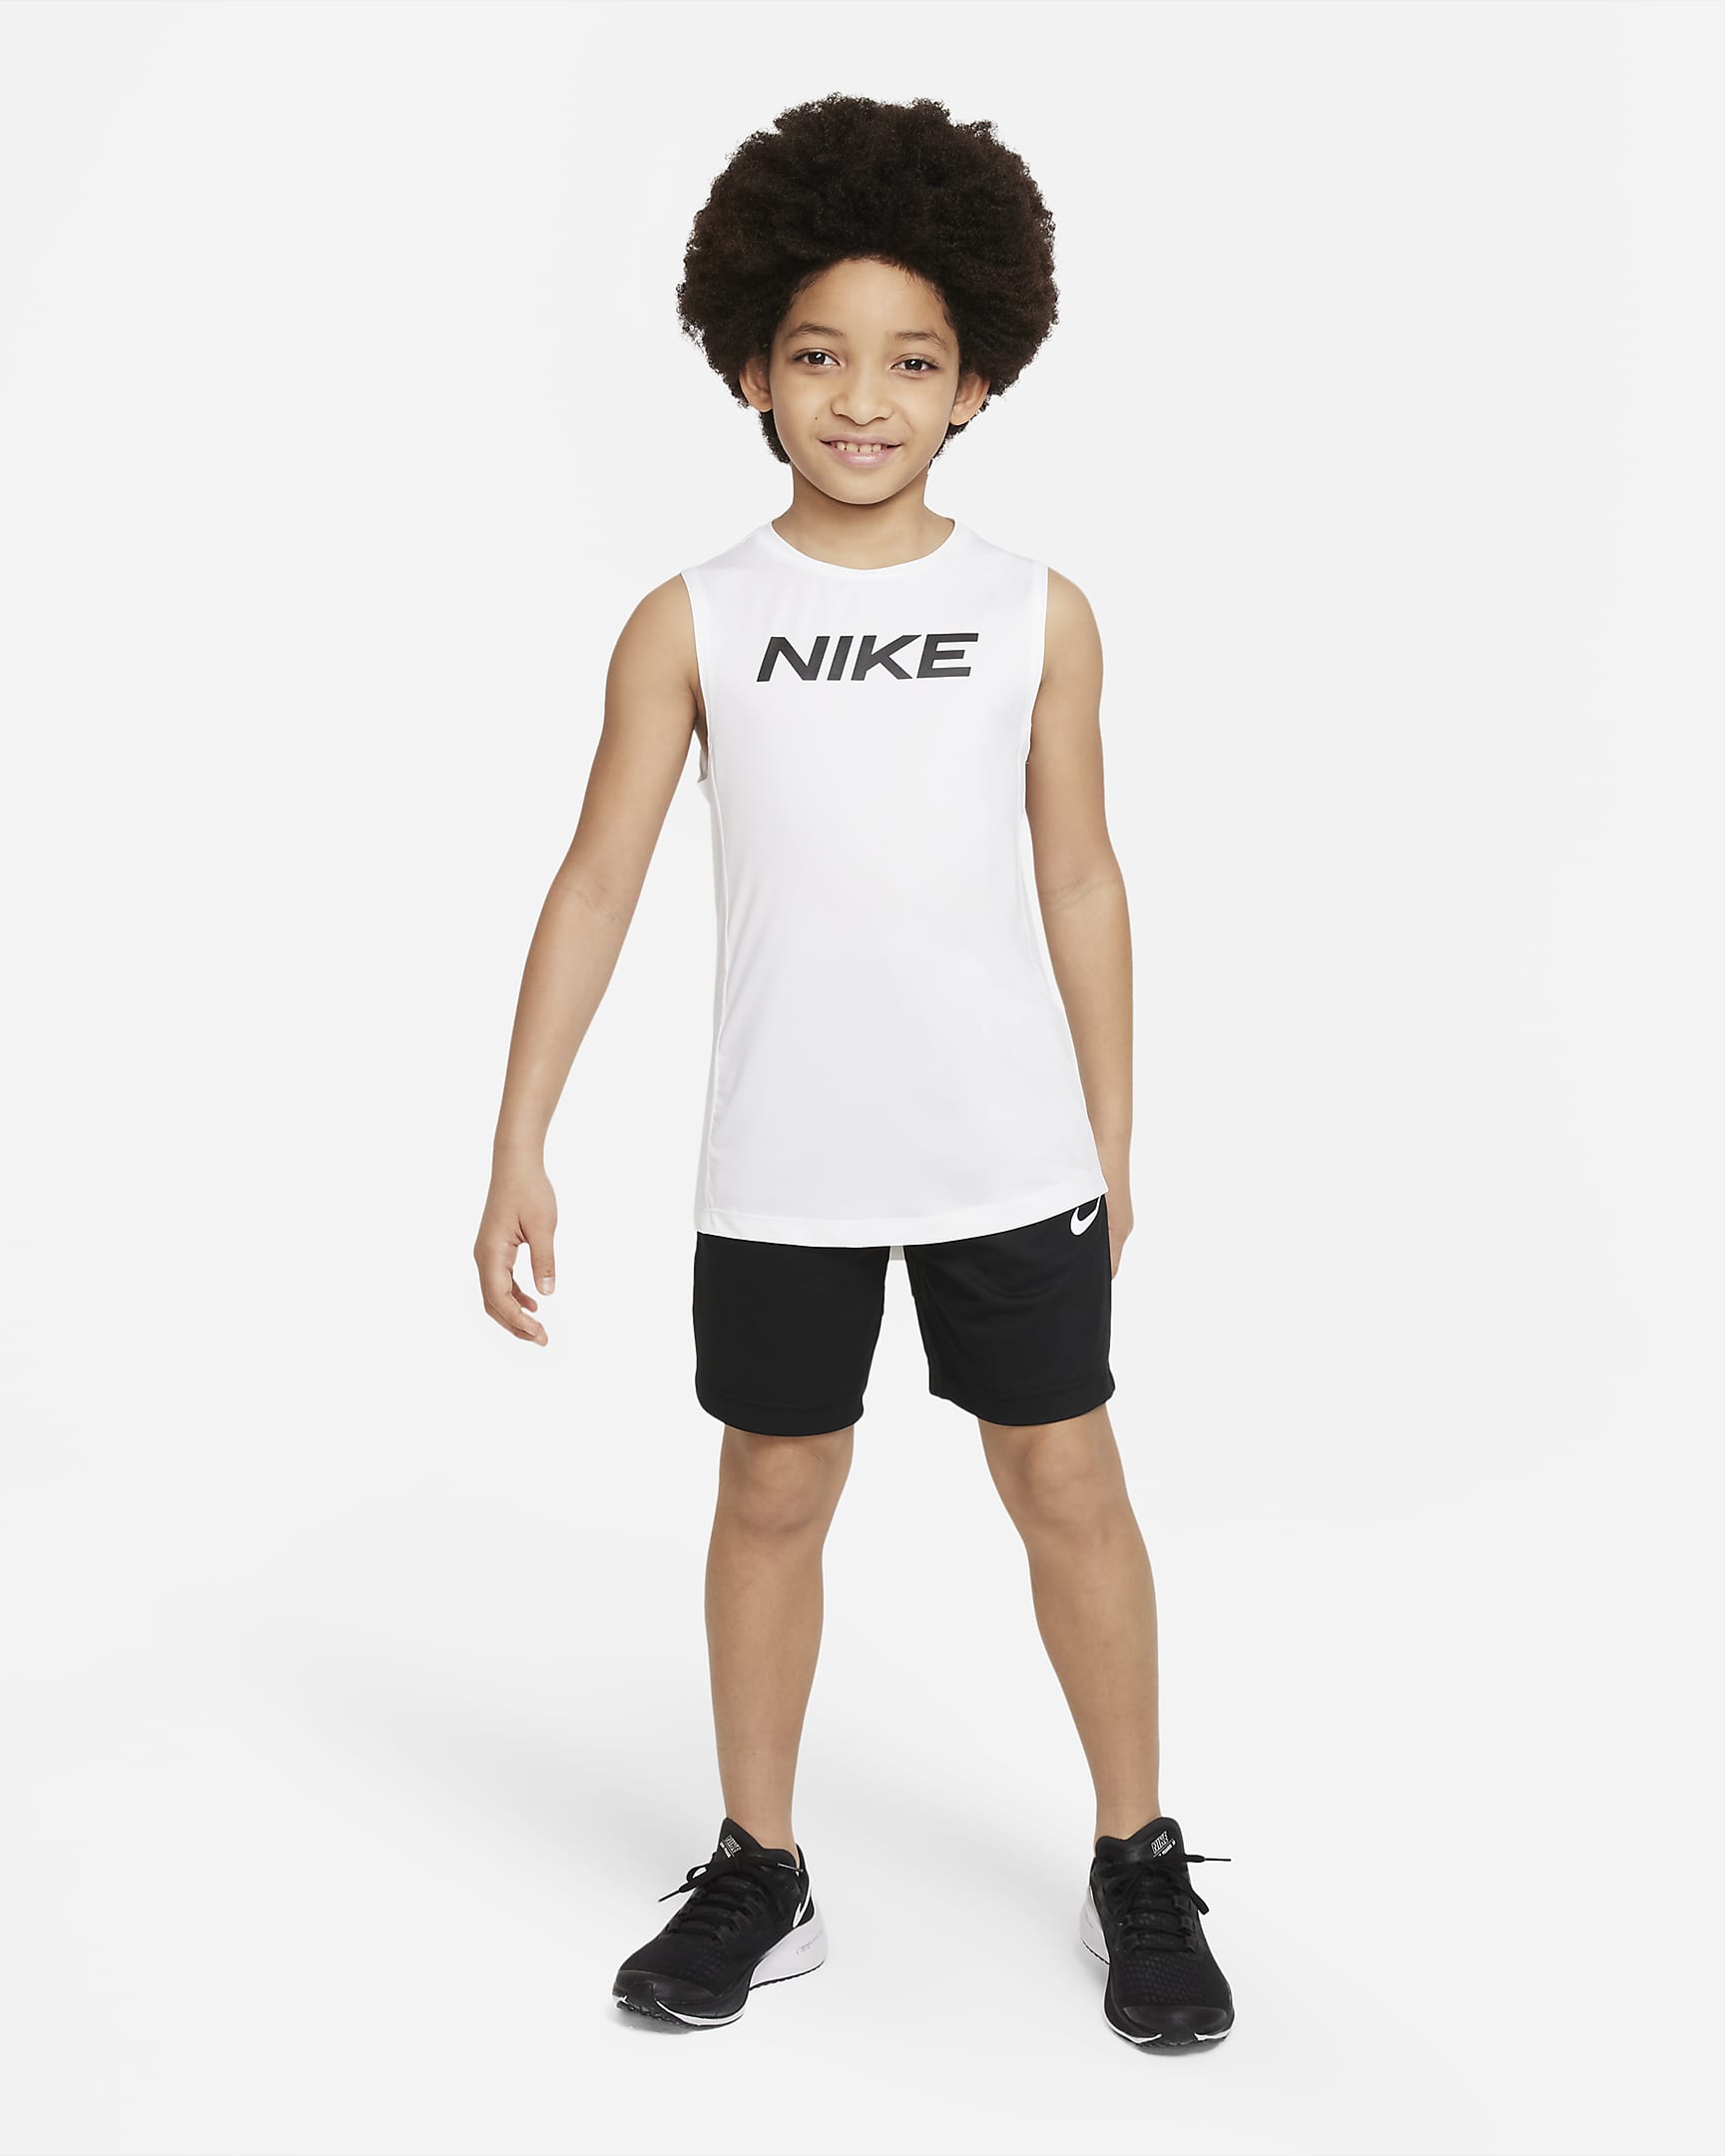 Nike Pro Big Kids' (Boys') Sleeveless Top. Nike.com